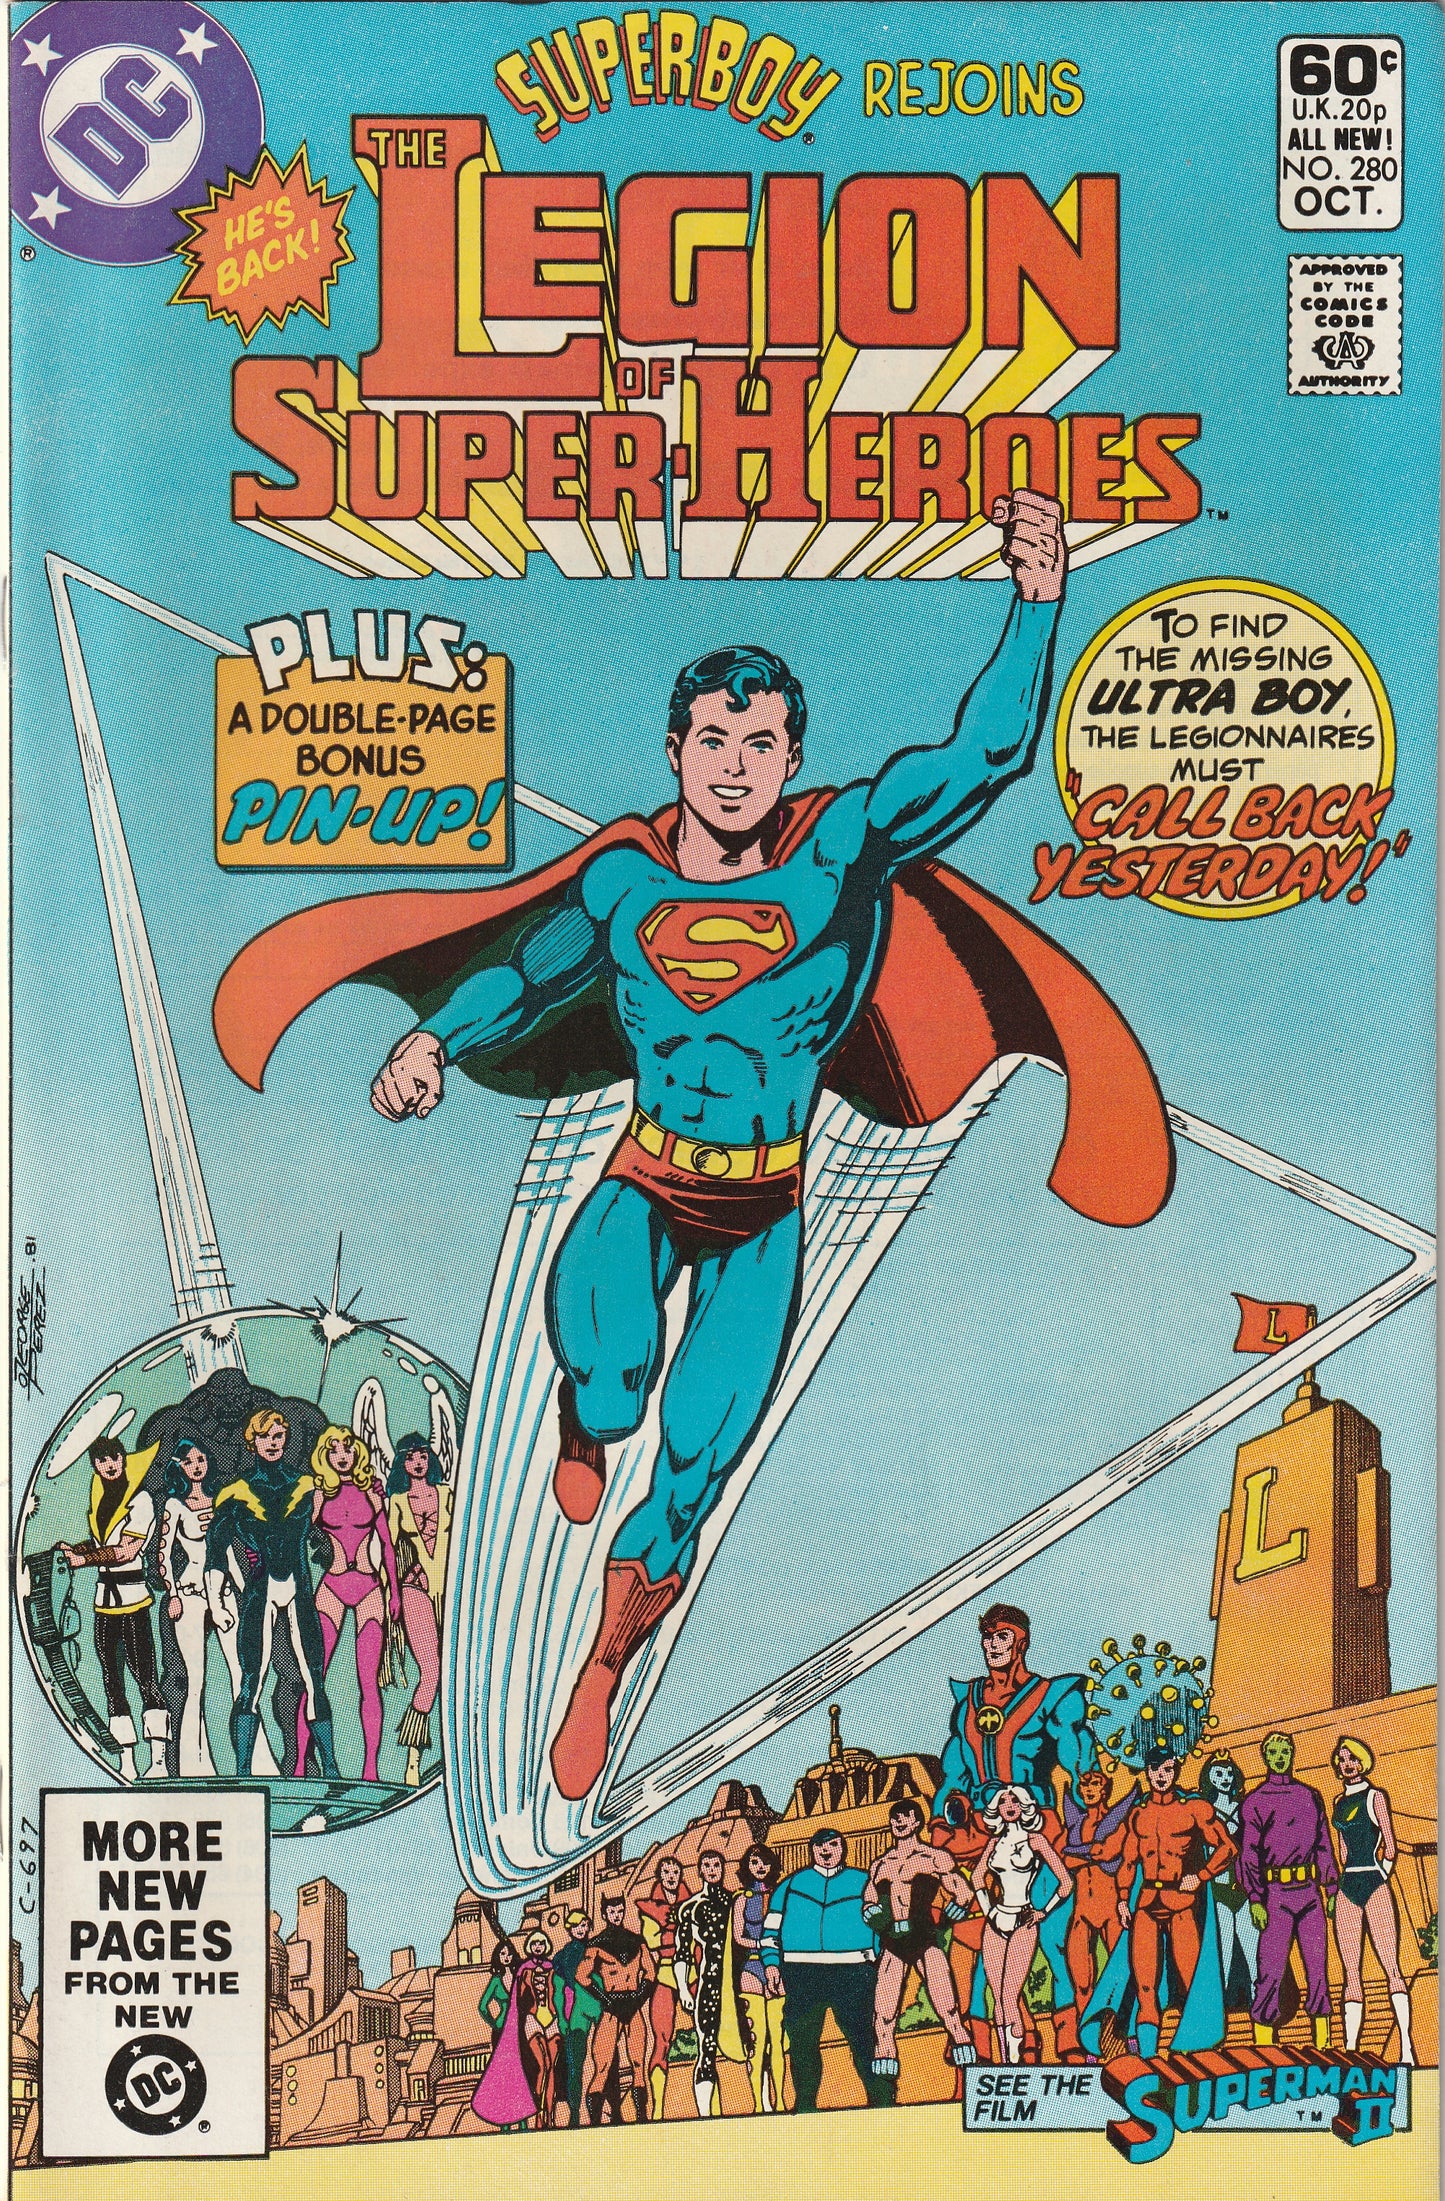 Legion of Super-Heroes #280 (1981) - Superboy rejoins the Legion